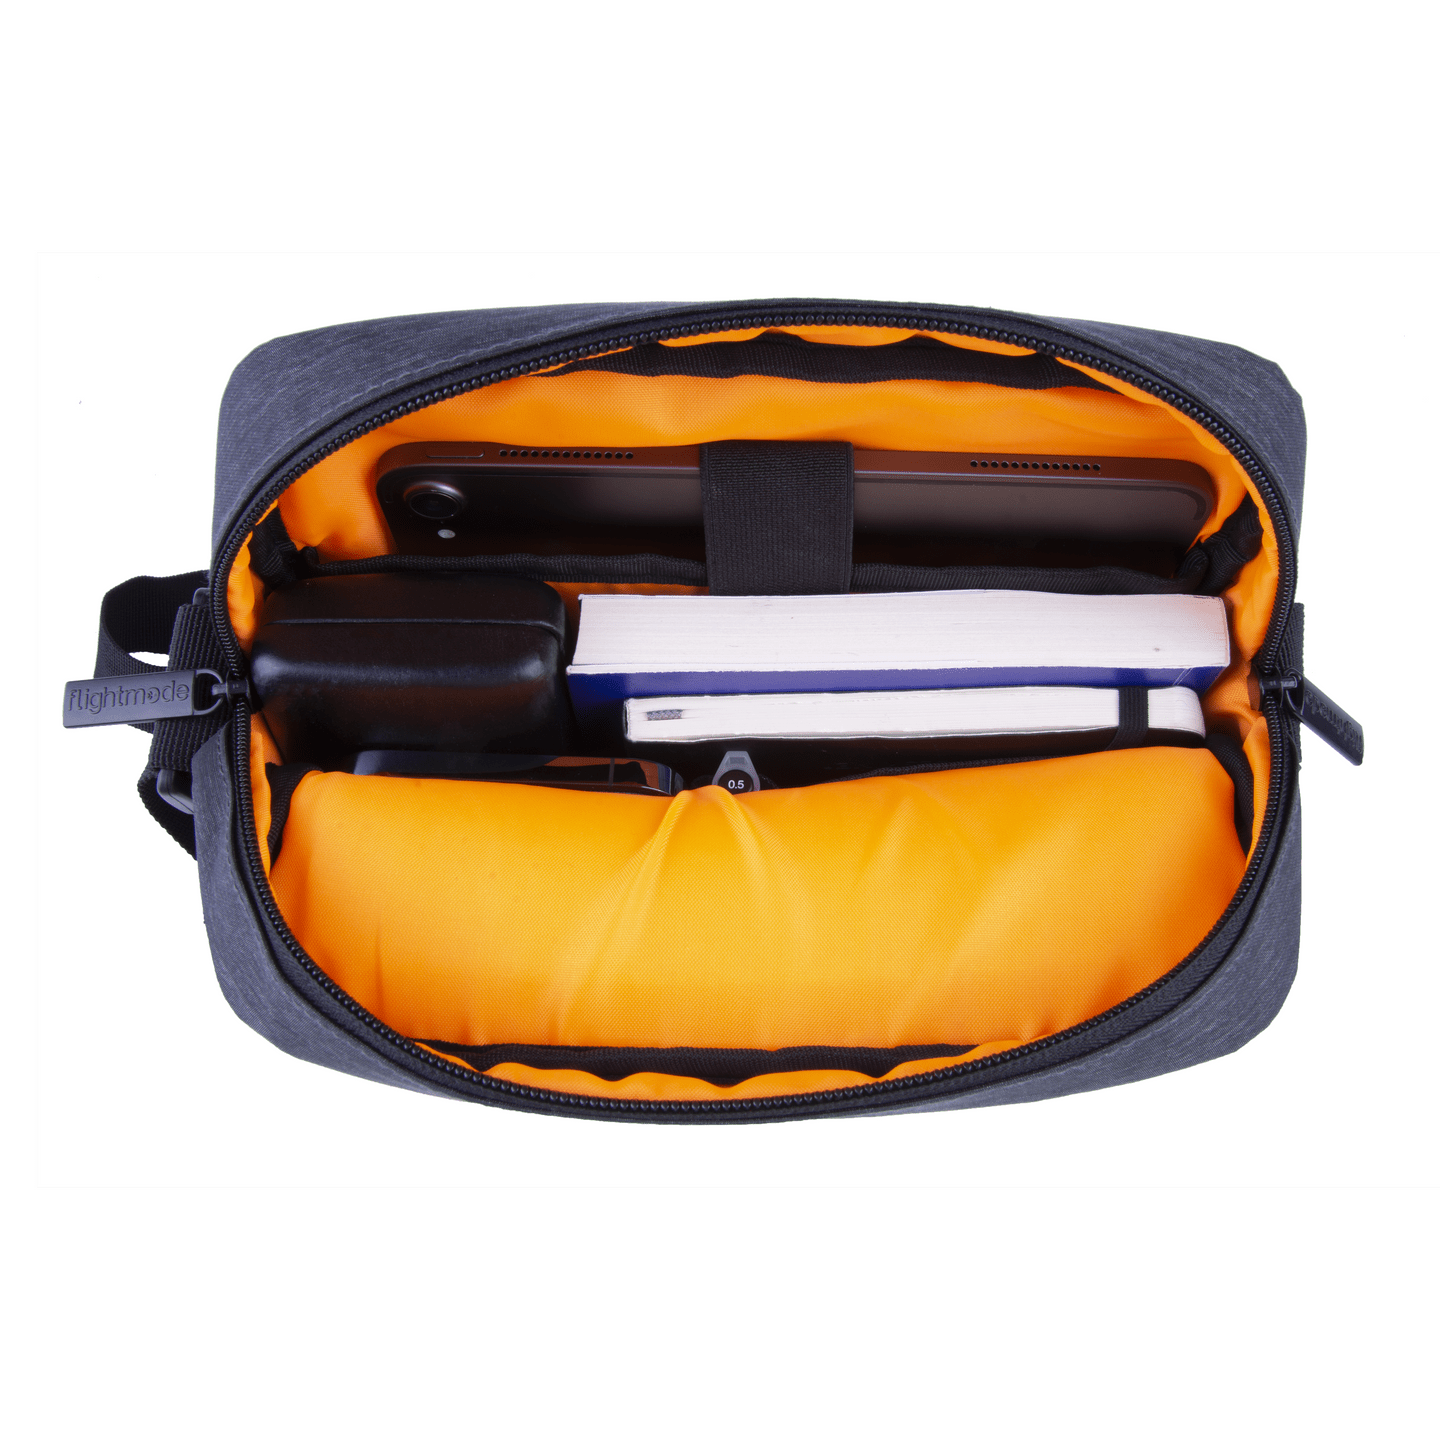 Flightmode Bags and Luggage Flightmode Cross Body Bag - Charcoal